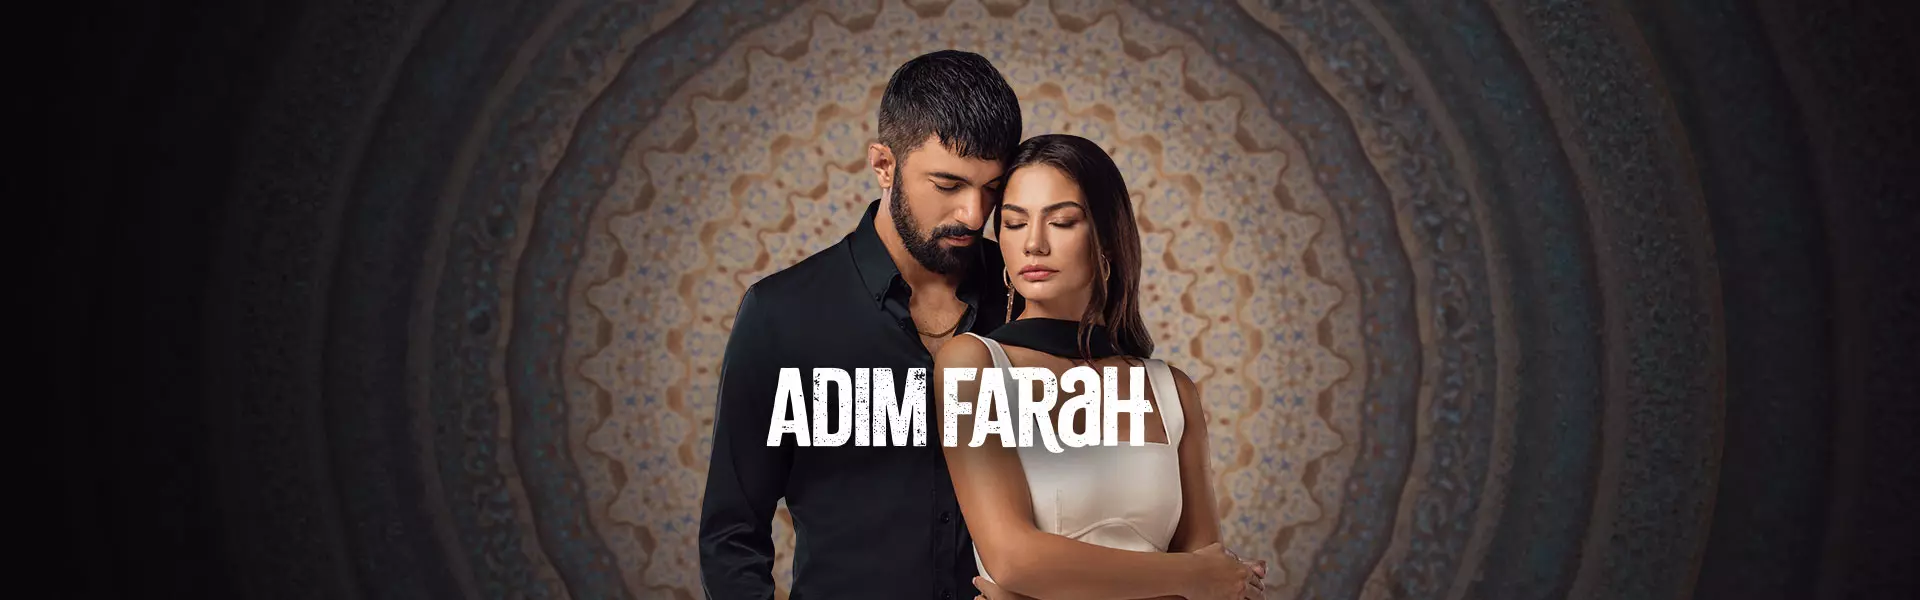 Farah (Adim Farah) English subtitles